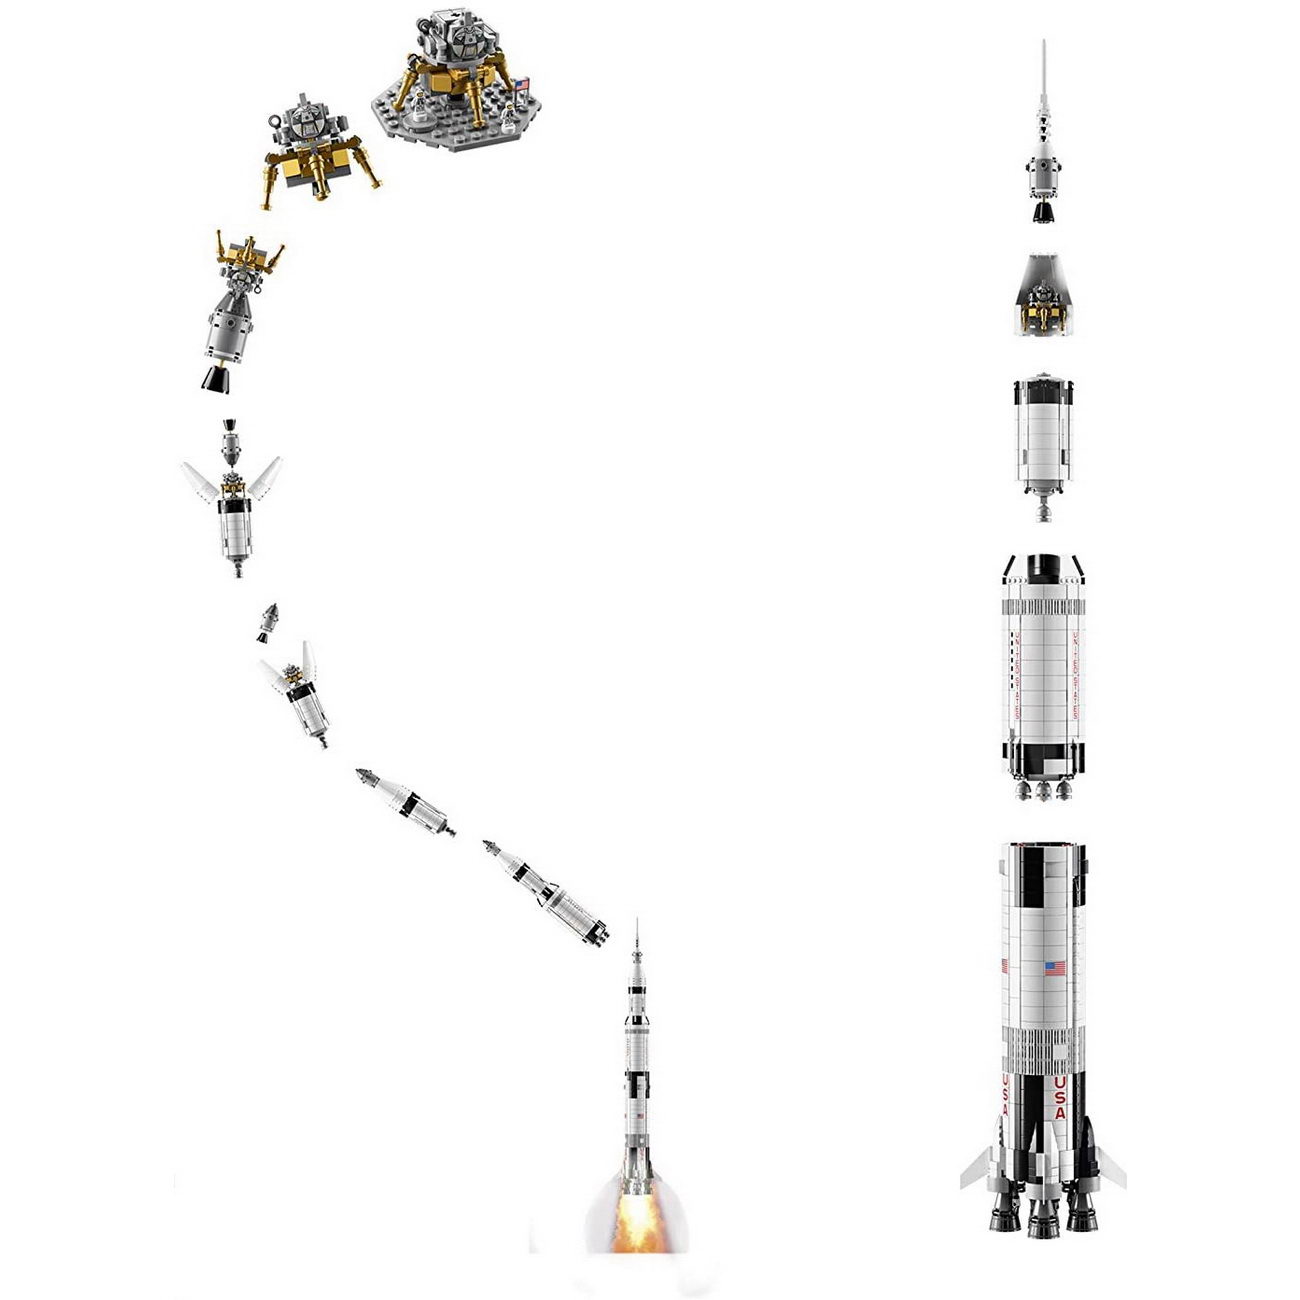 LEGO 21309 - Apollo Saturn 5